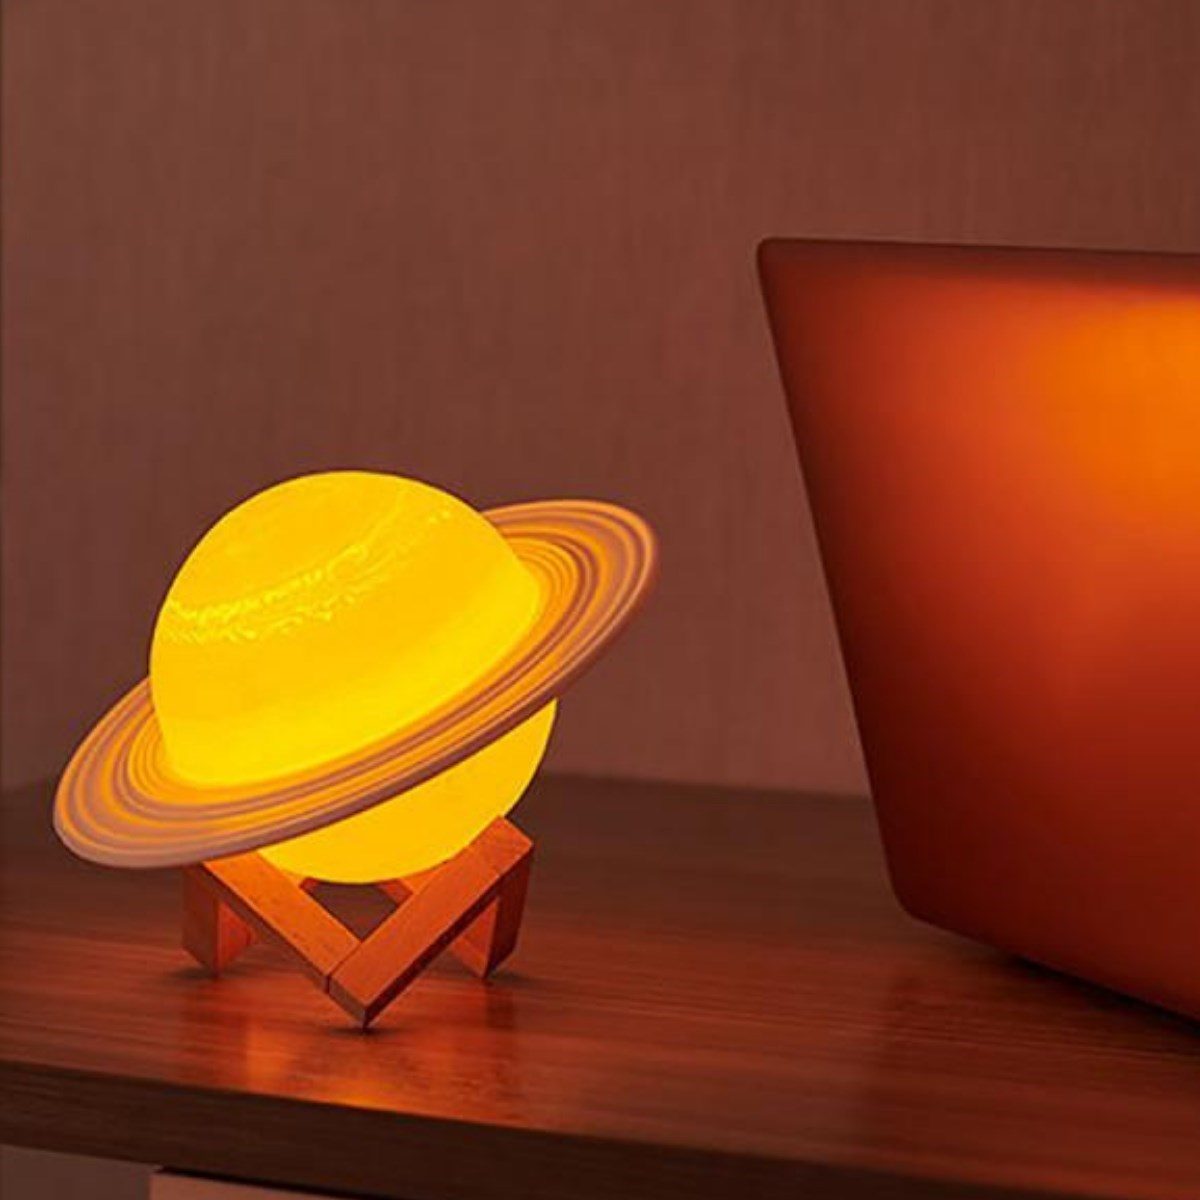 CLZ192 3D Print Satürn Dokunmatik Gezegen Ahşap Stantlı 3 Renk USB Şarjlı Gece Lambası (Kumandasız) (4172)